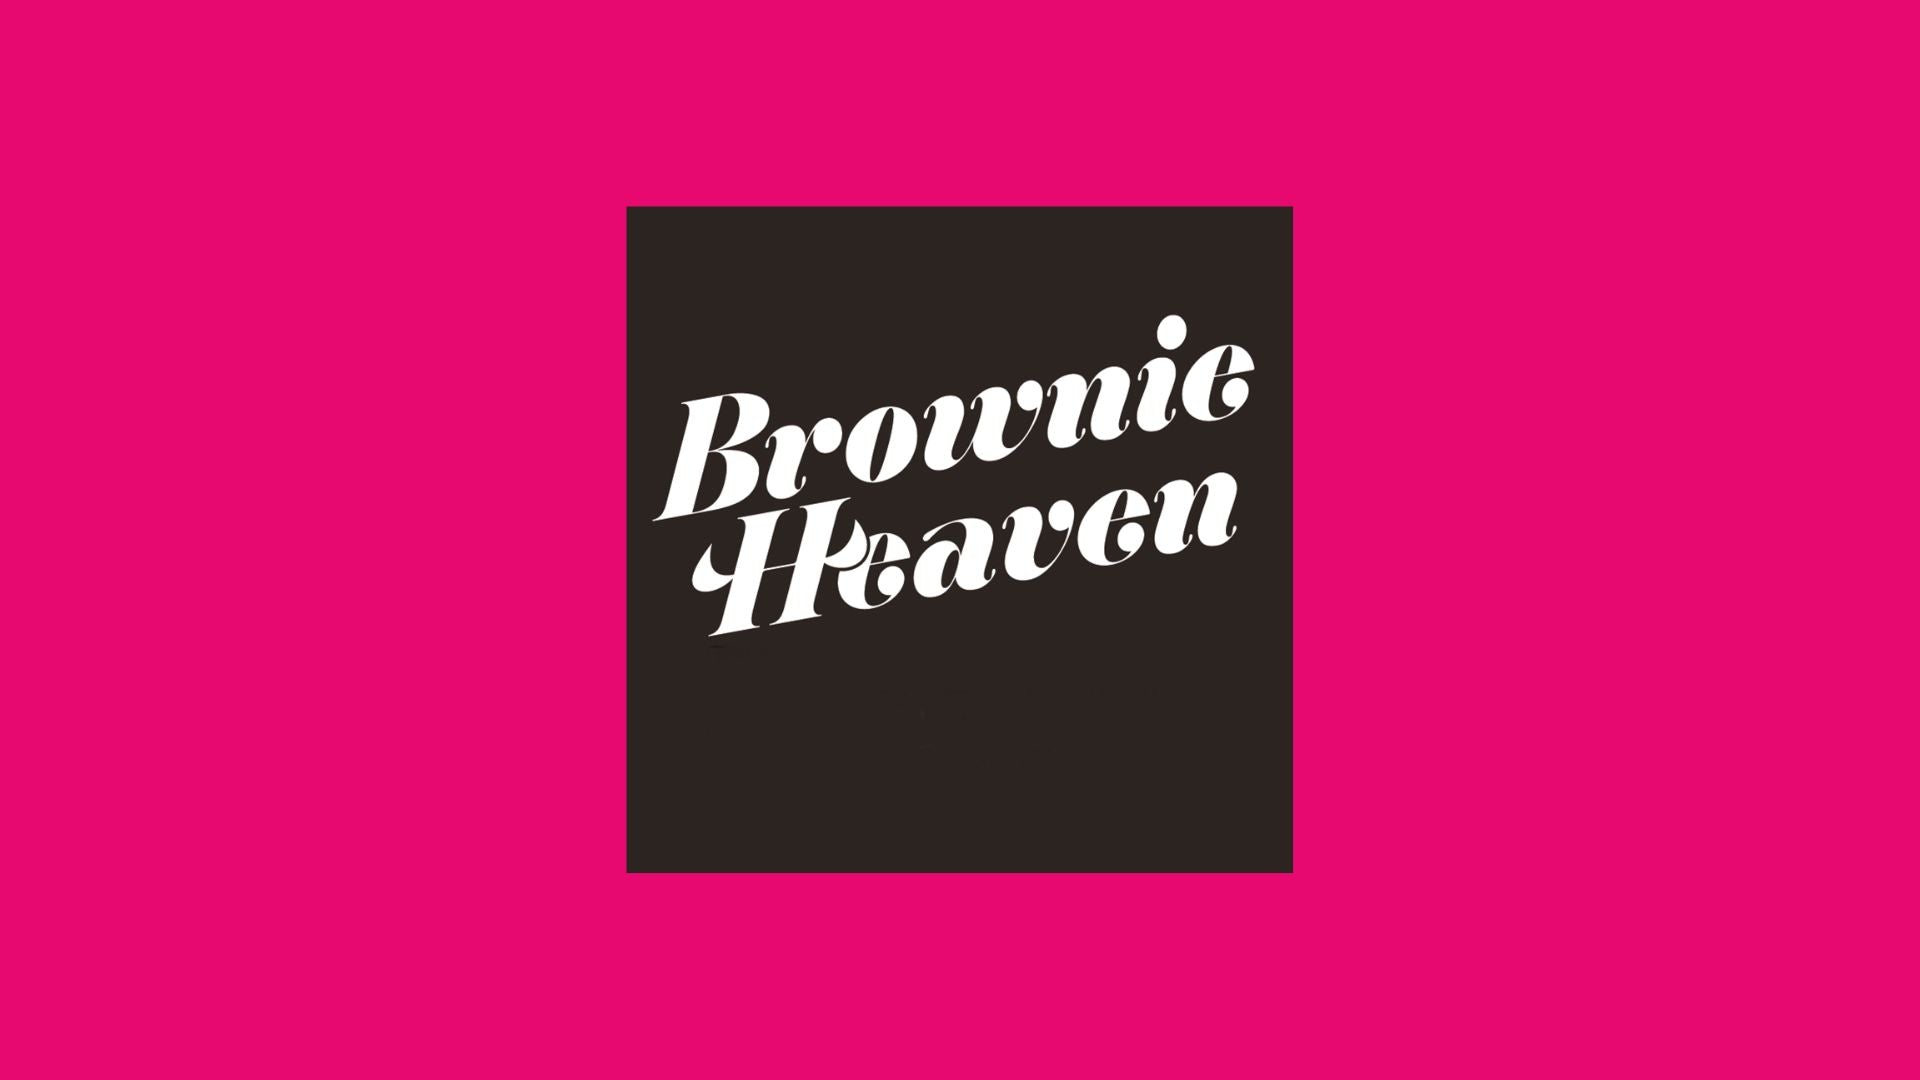 Load video: Brownie Heaven in the Beginning